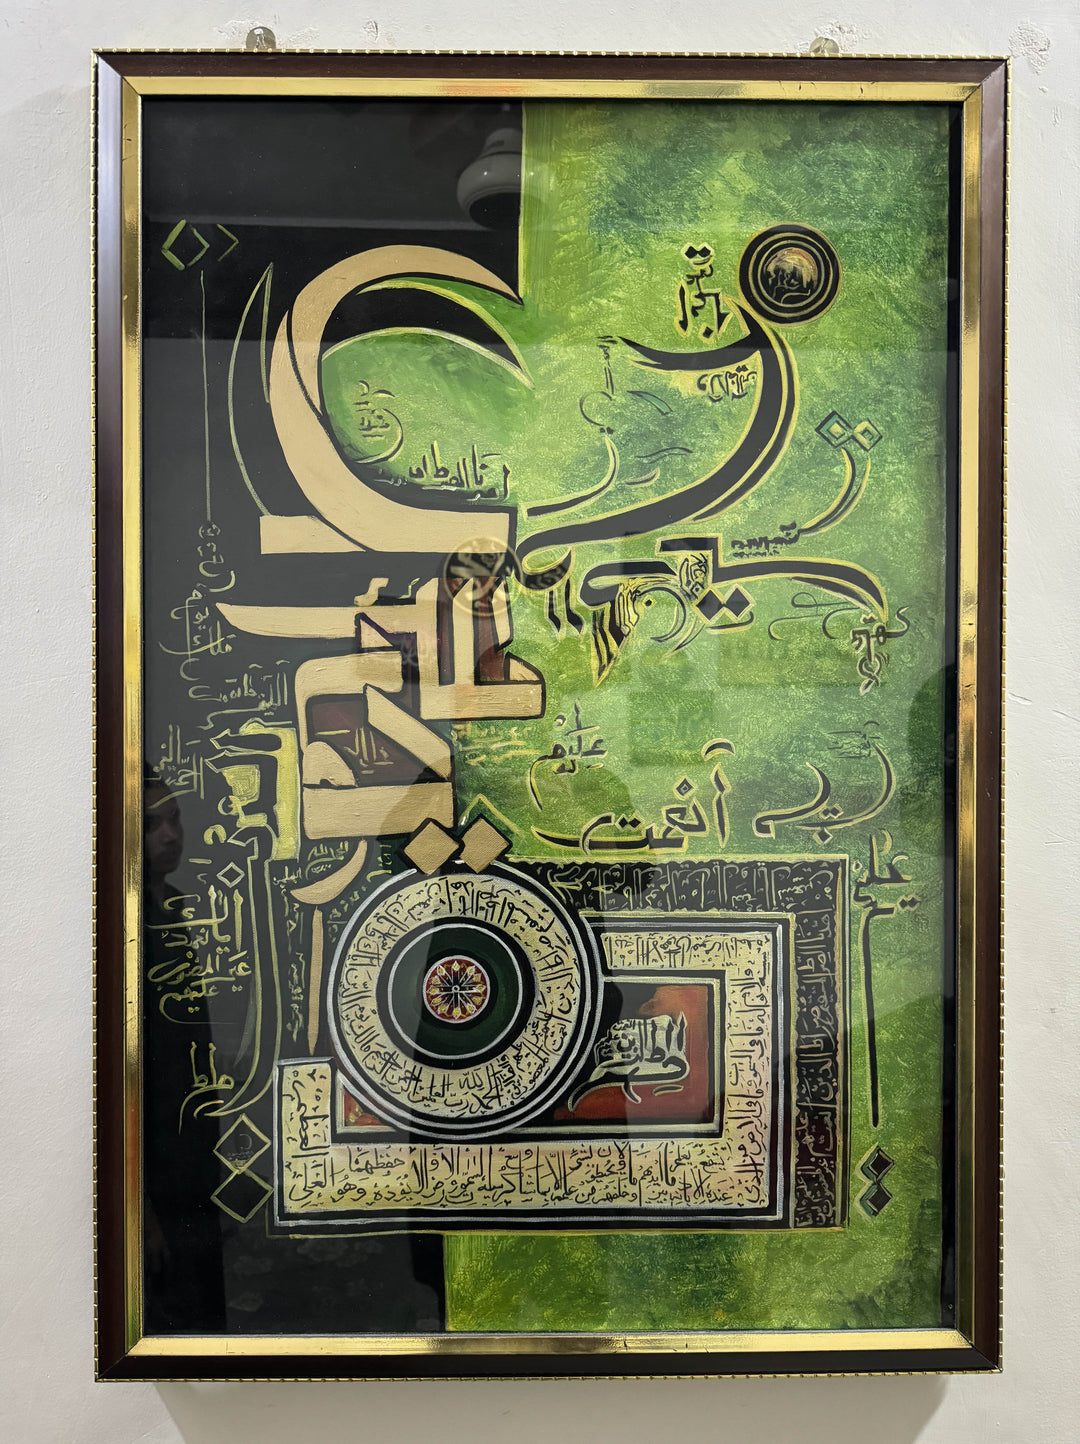 Surah Fatihah with Ayatul Kursi Calligraphy | Home Decor | Arabic Wall Decor | Muslim Gifts | Wall Art | Room Decor | Islamic Gift | Quran